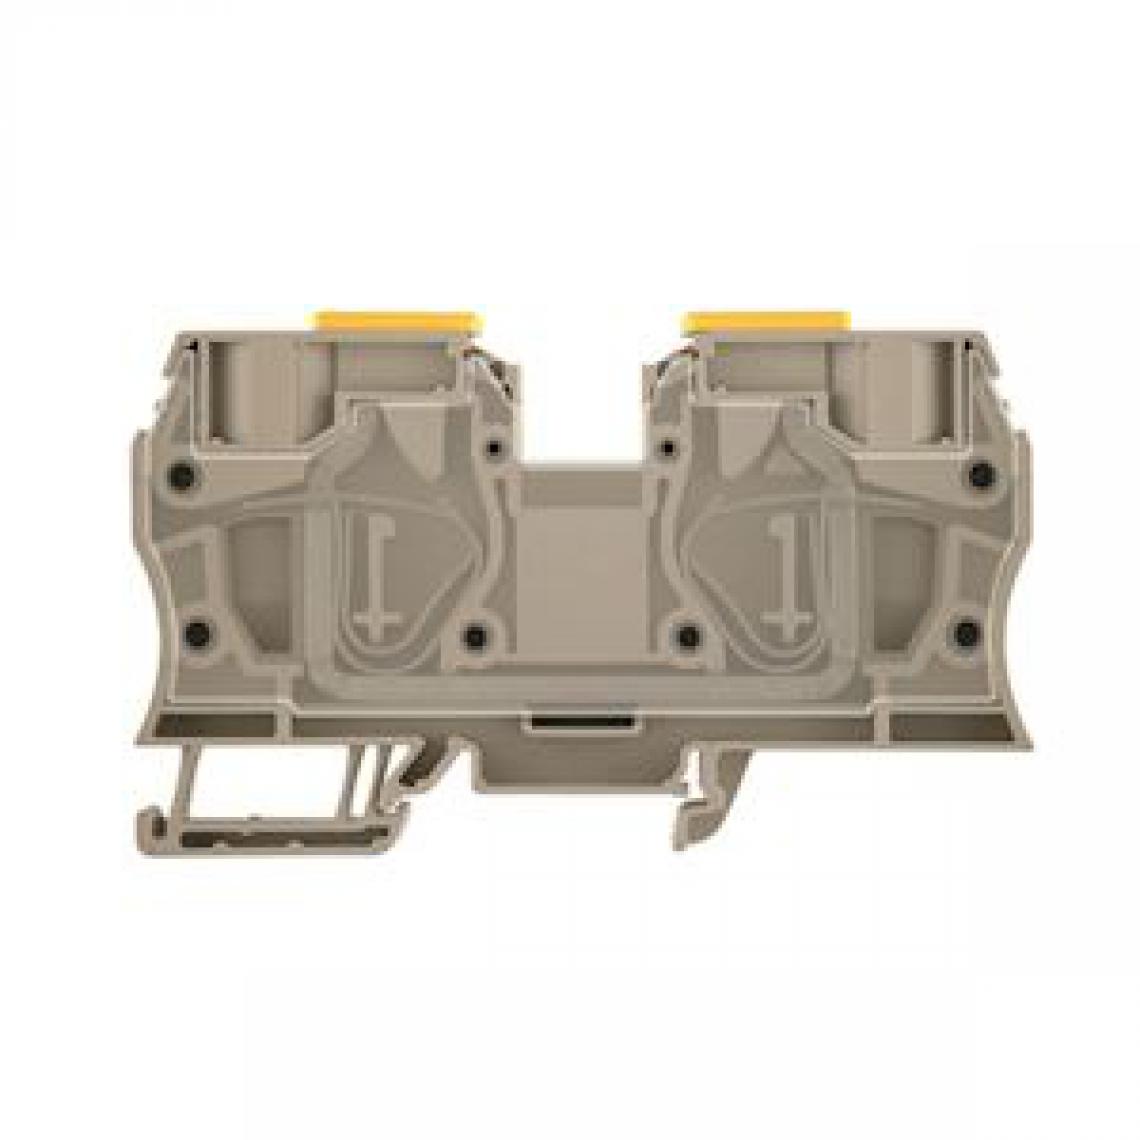 Weidmuller - bloc de jonction - passage - a ressort - zdu - 35 mm2 - beige foncé - weidmuller 1739620000 - Autres équipements modulaires